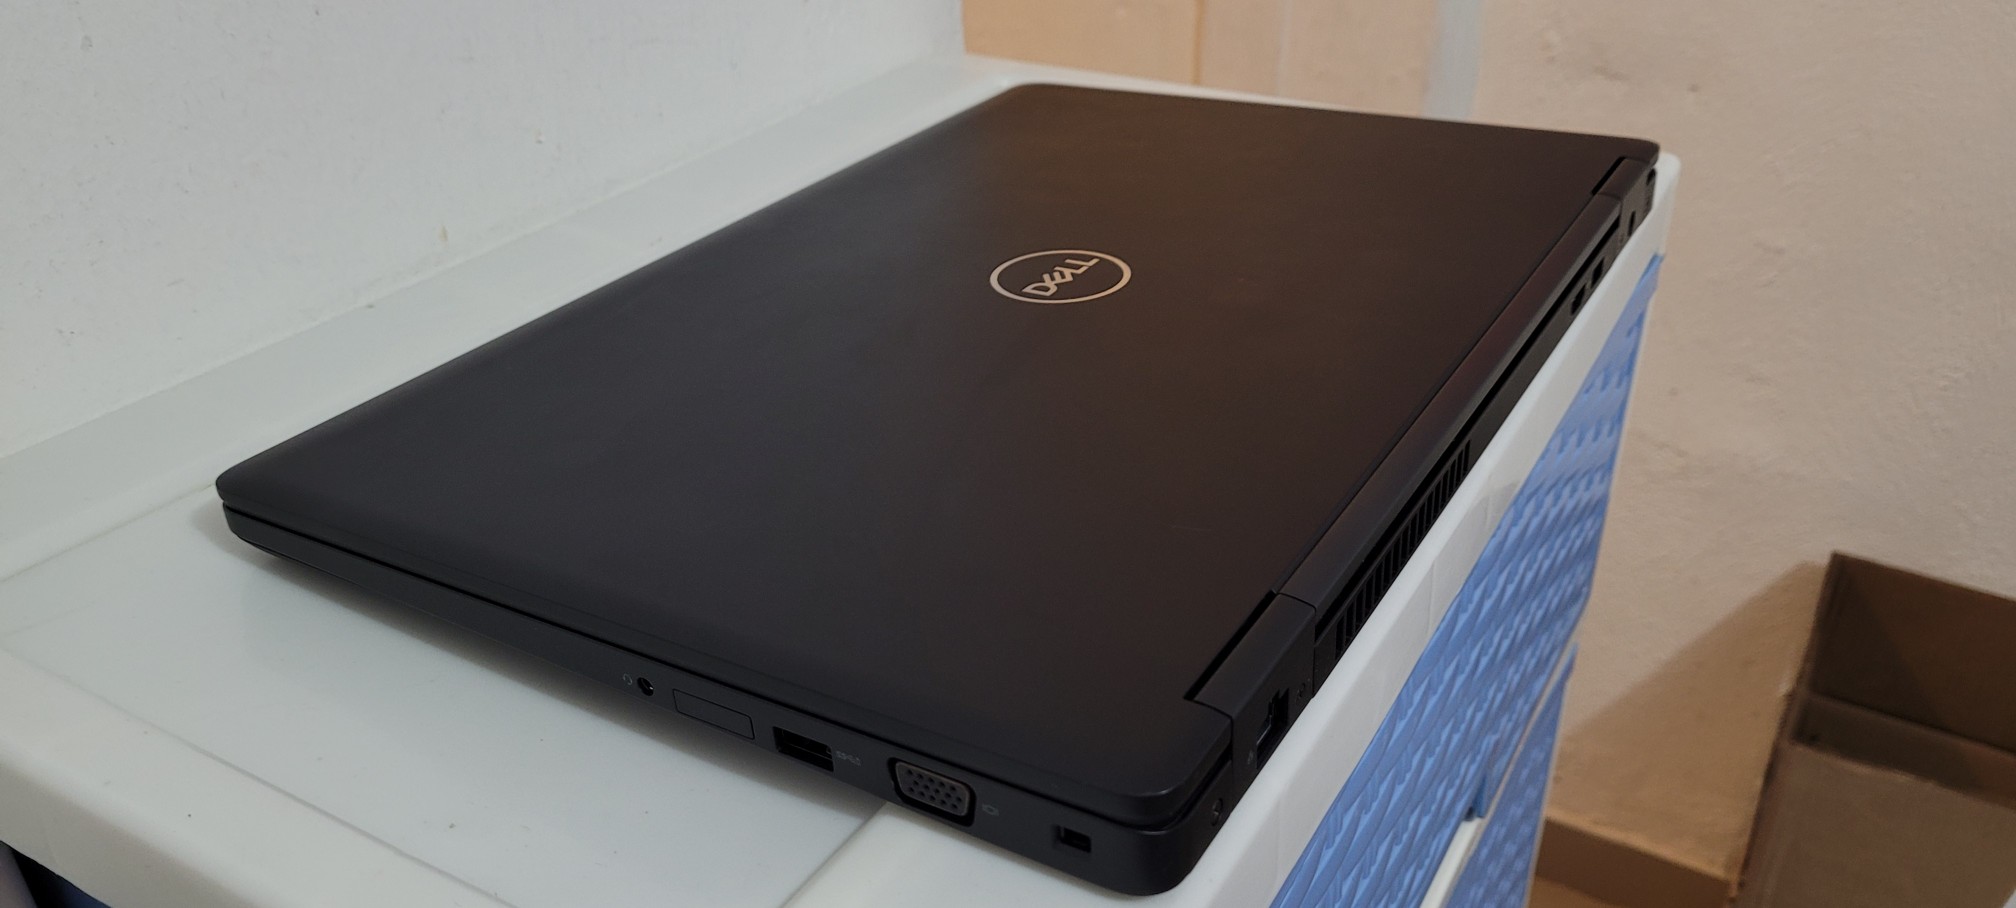 computadoras y laptops - Dell 5590 17 Pulg Core i5 8va Gen Ram 16gb Disco 500gb SSD video 8gb 2